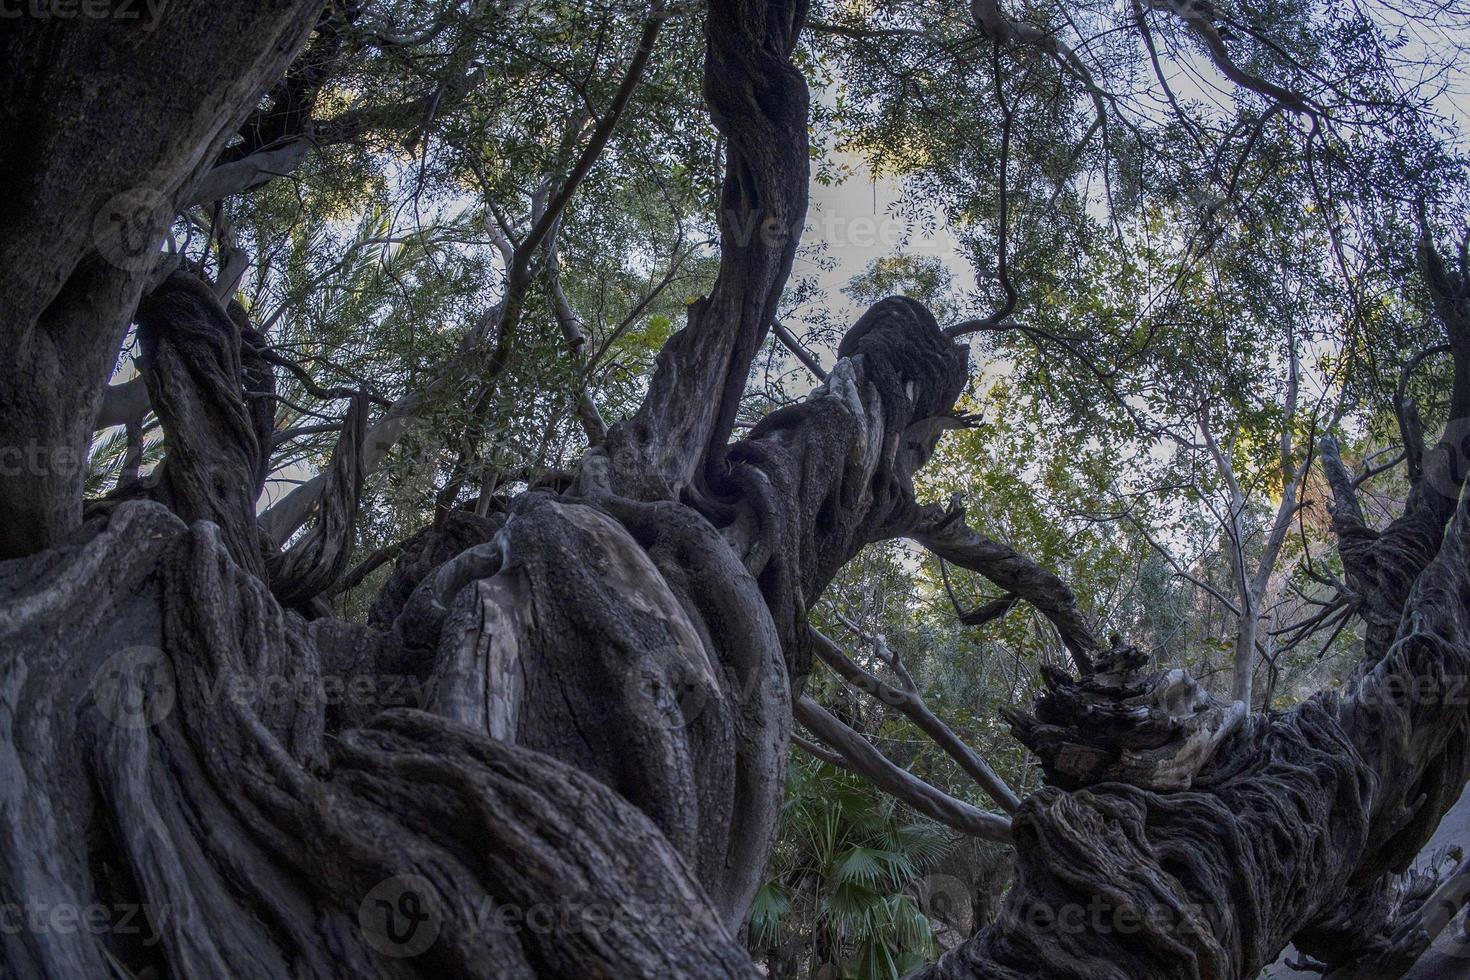 300 YEAR OLD OLIVE TREE in san francisco javier vigge biaundo mission loreto photo